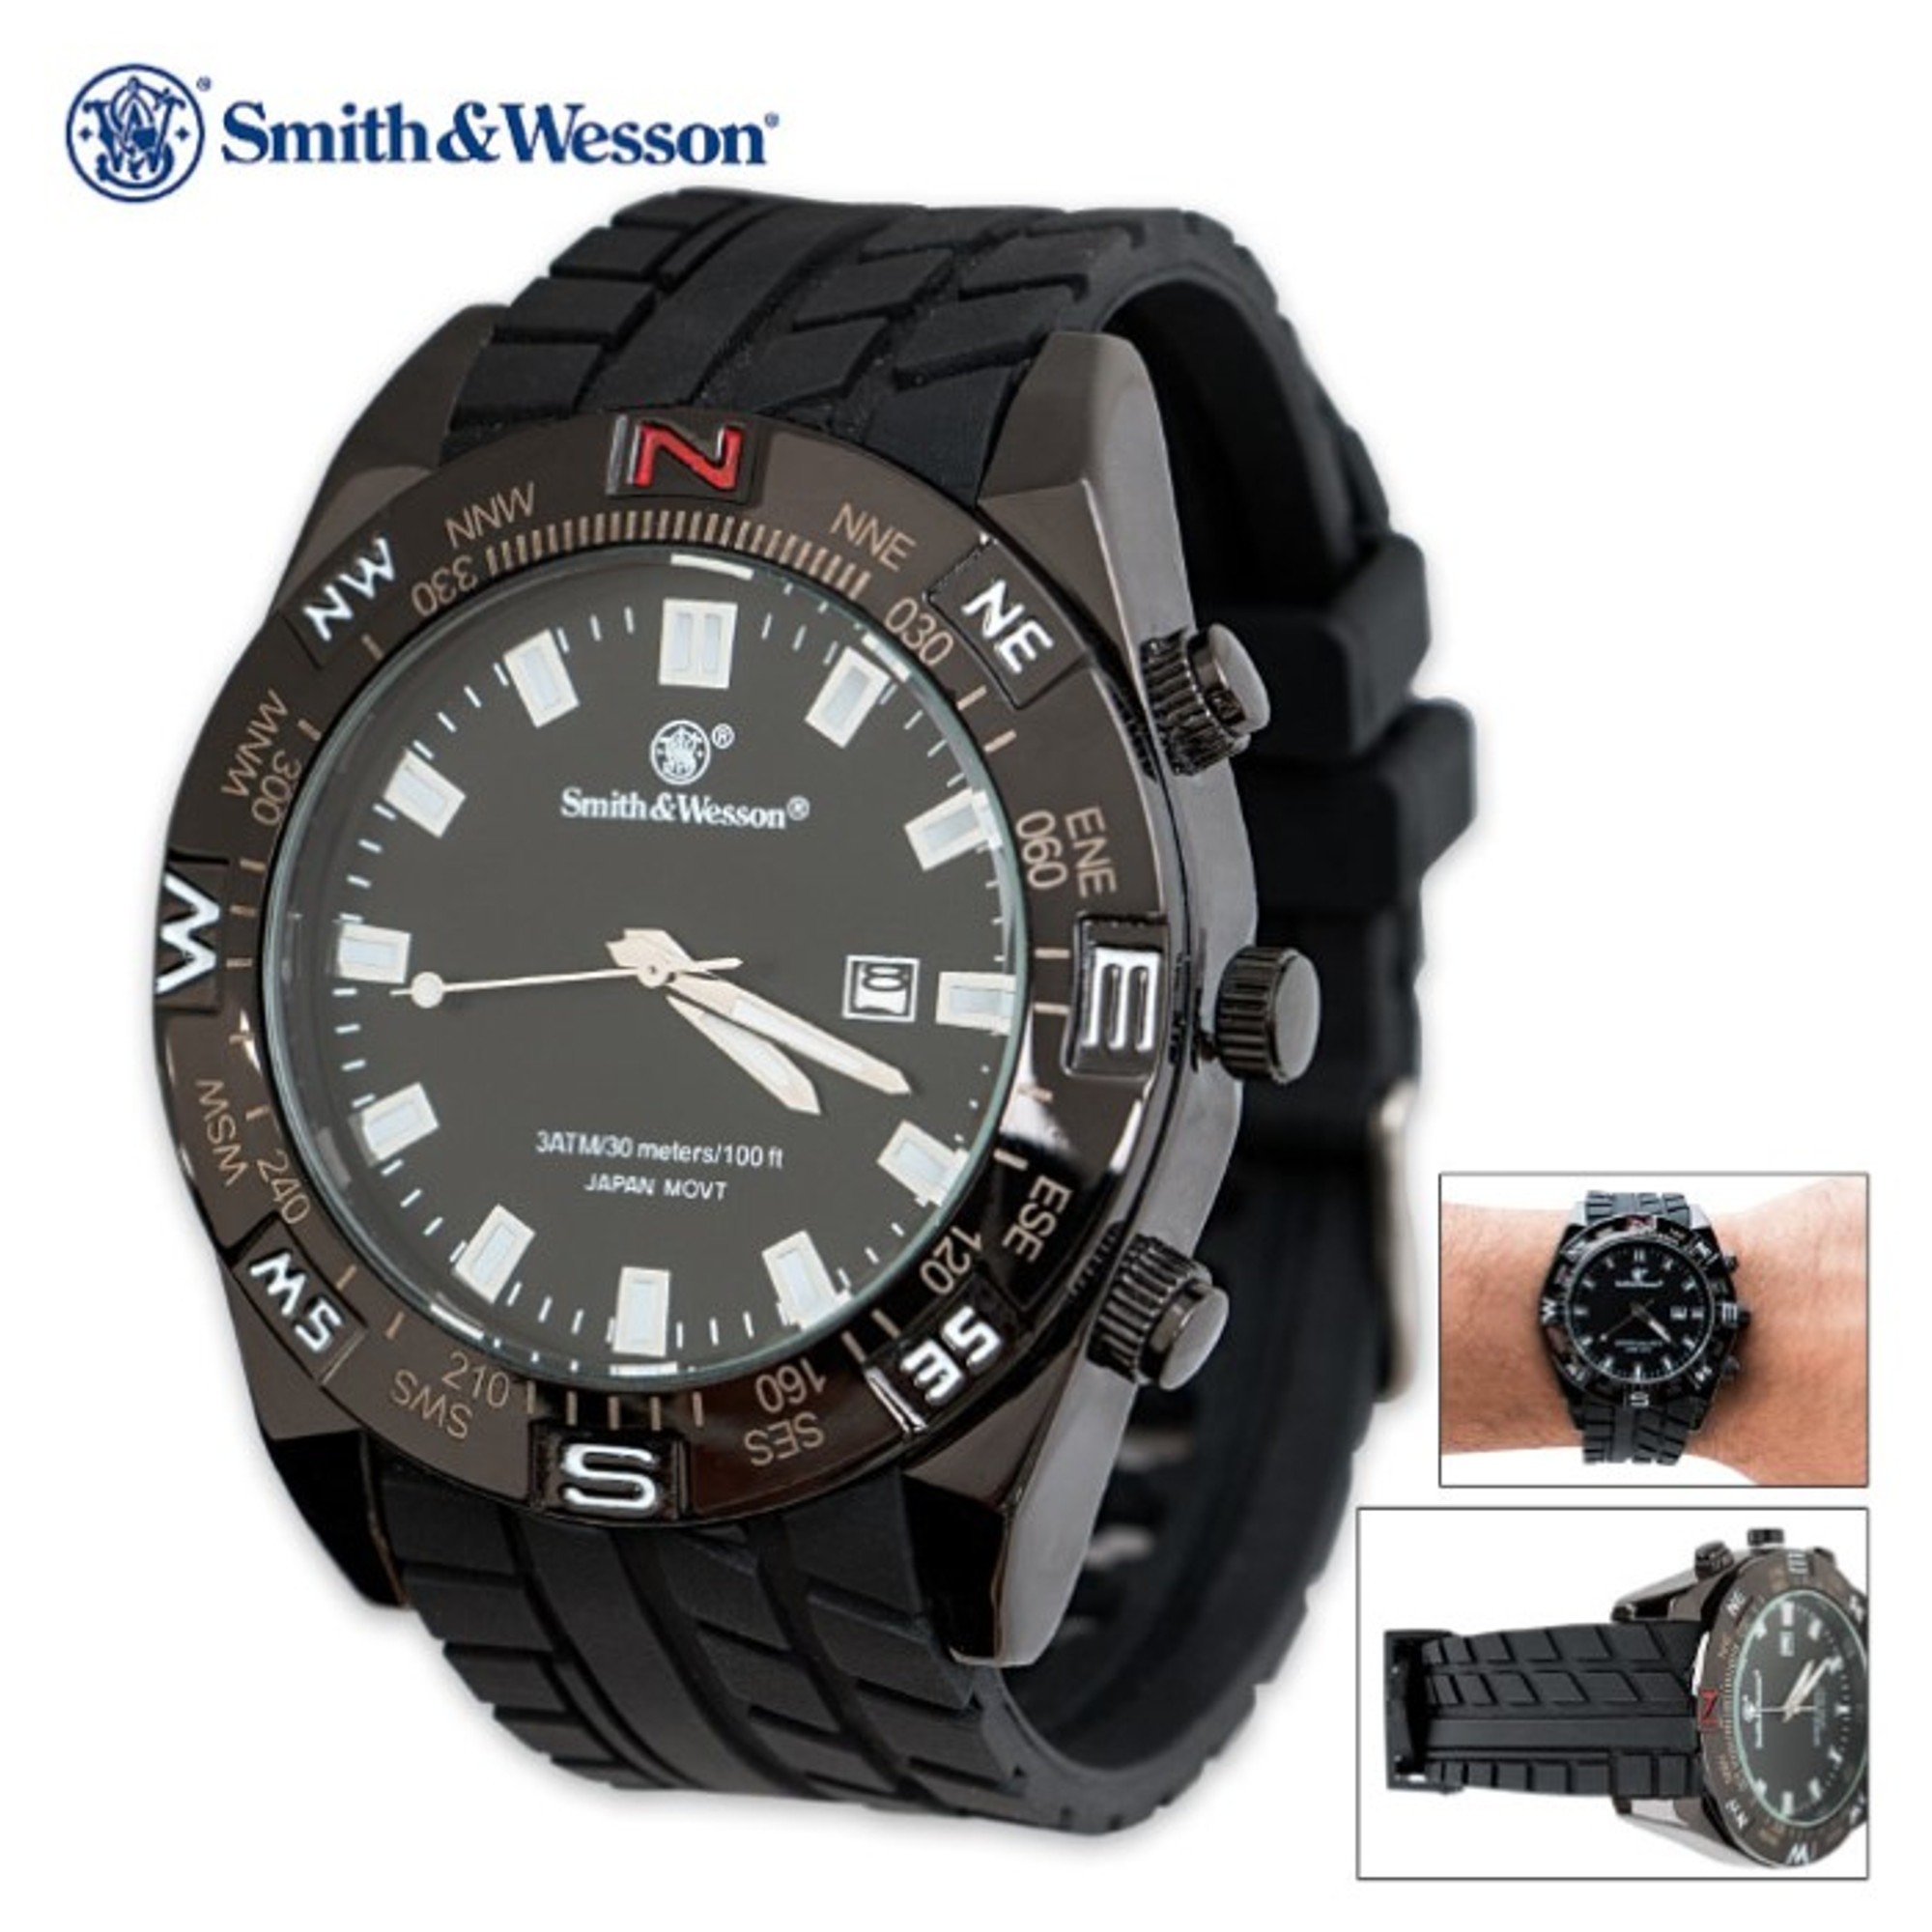 Smith & Wesson Field Watch - Black